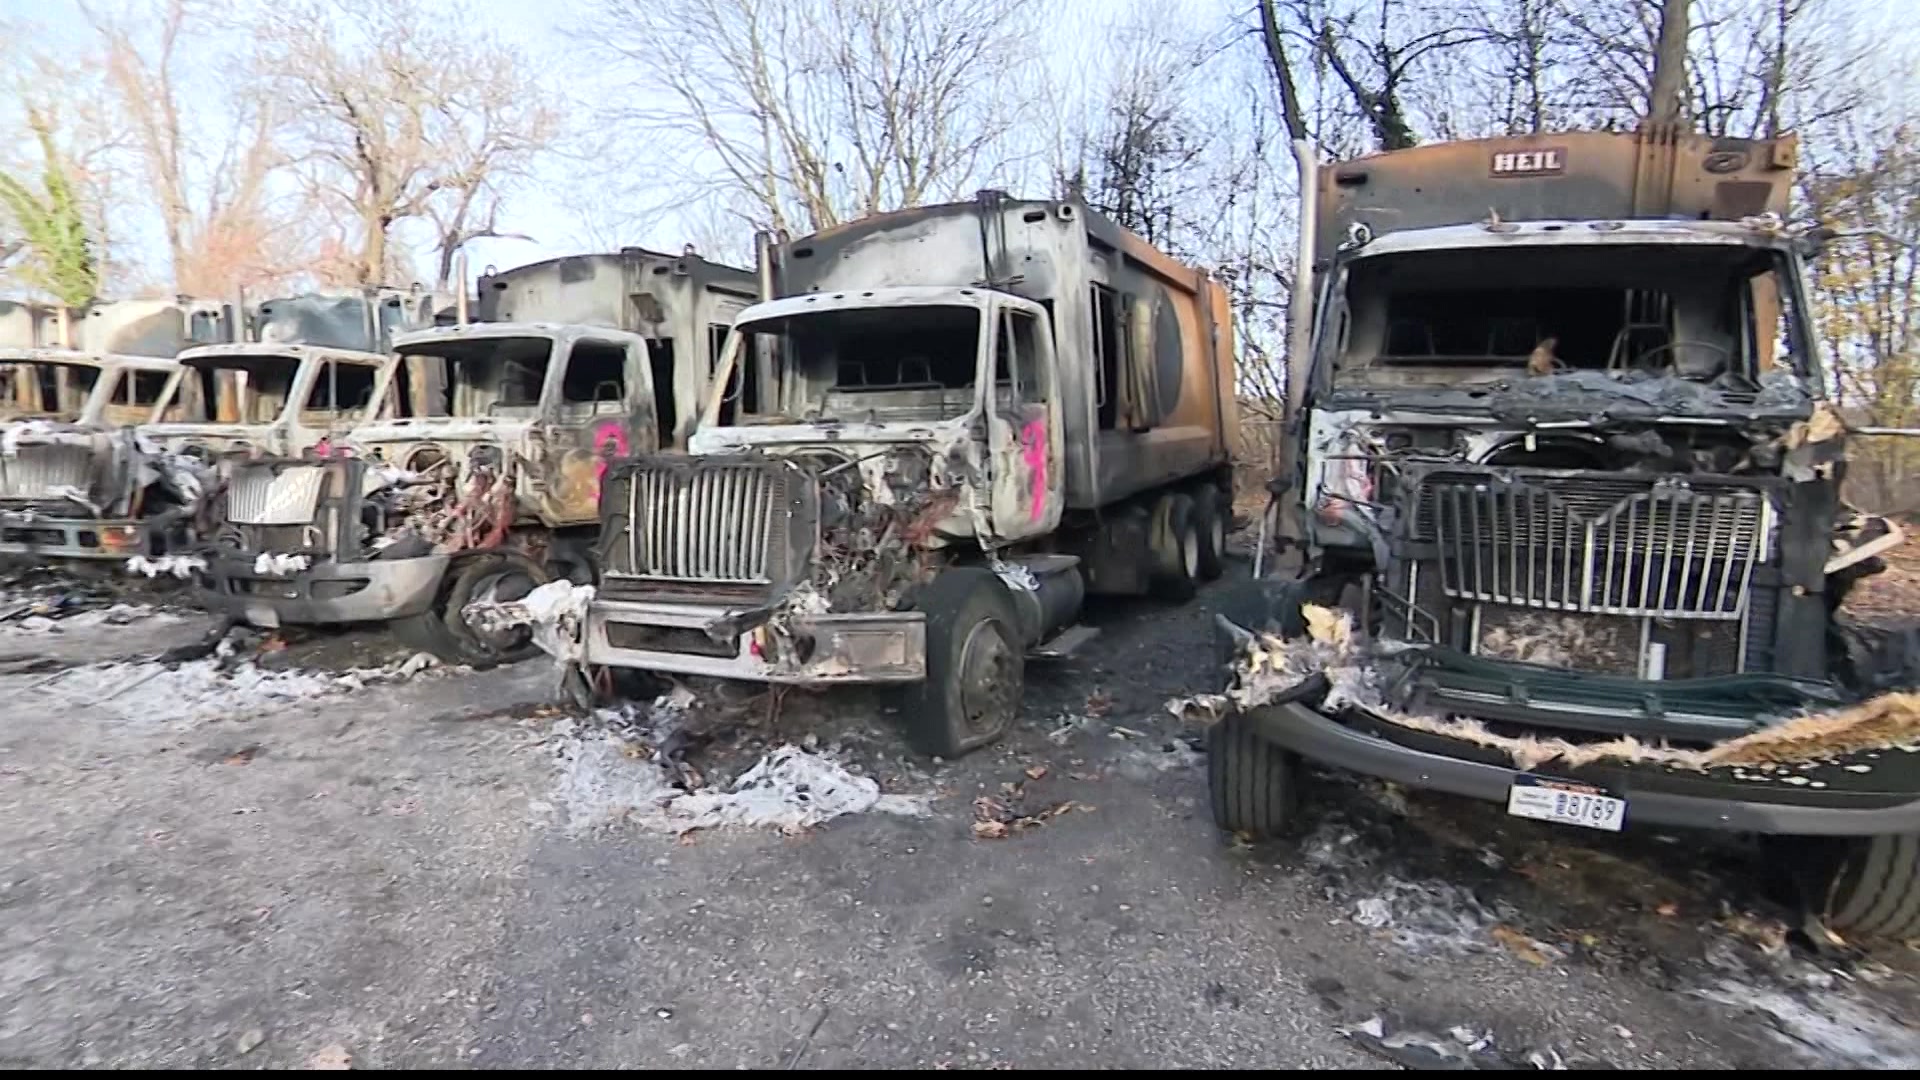 Town of Huntington 6 garbage trucks destroyed in maintenance yard fire